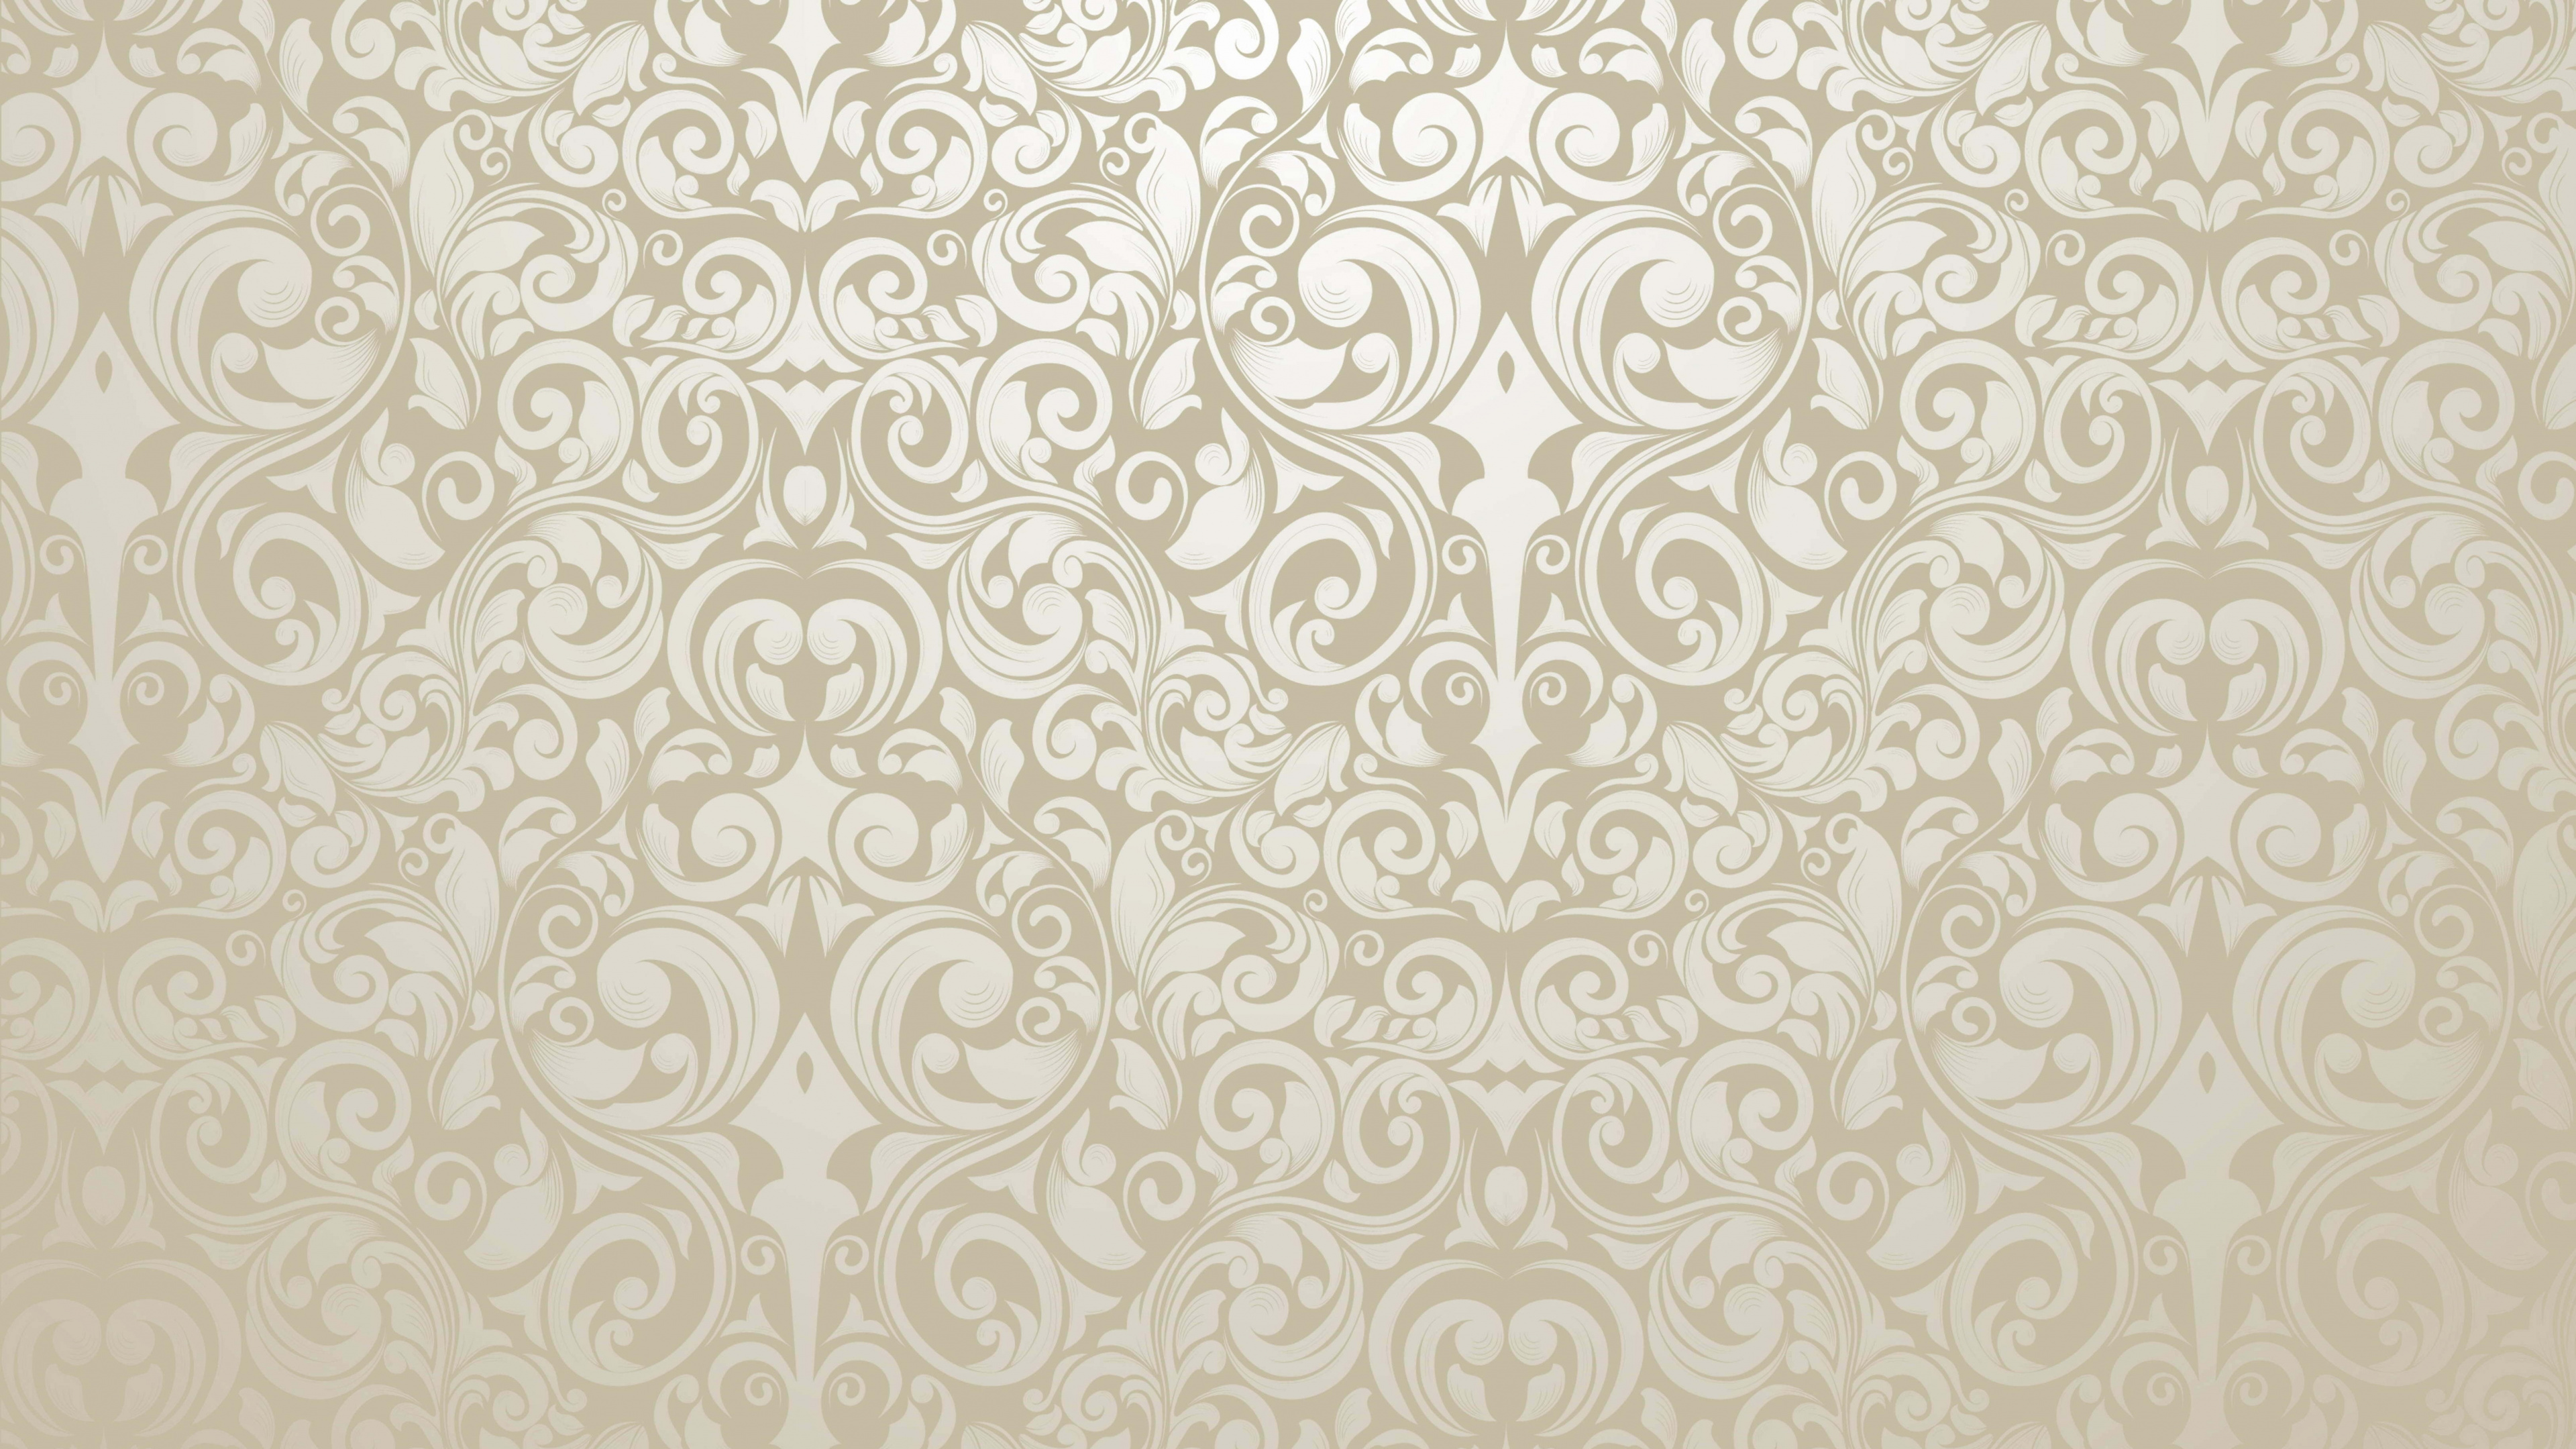 Textil Floral Blanco y Negro. Wallpaper in 3840x2160 Resolution